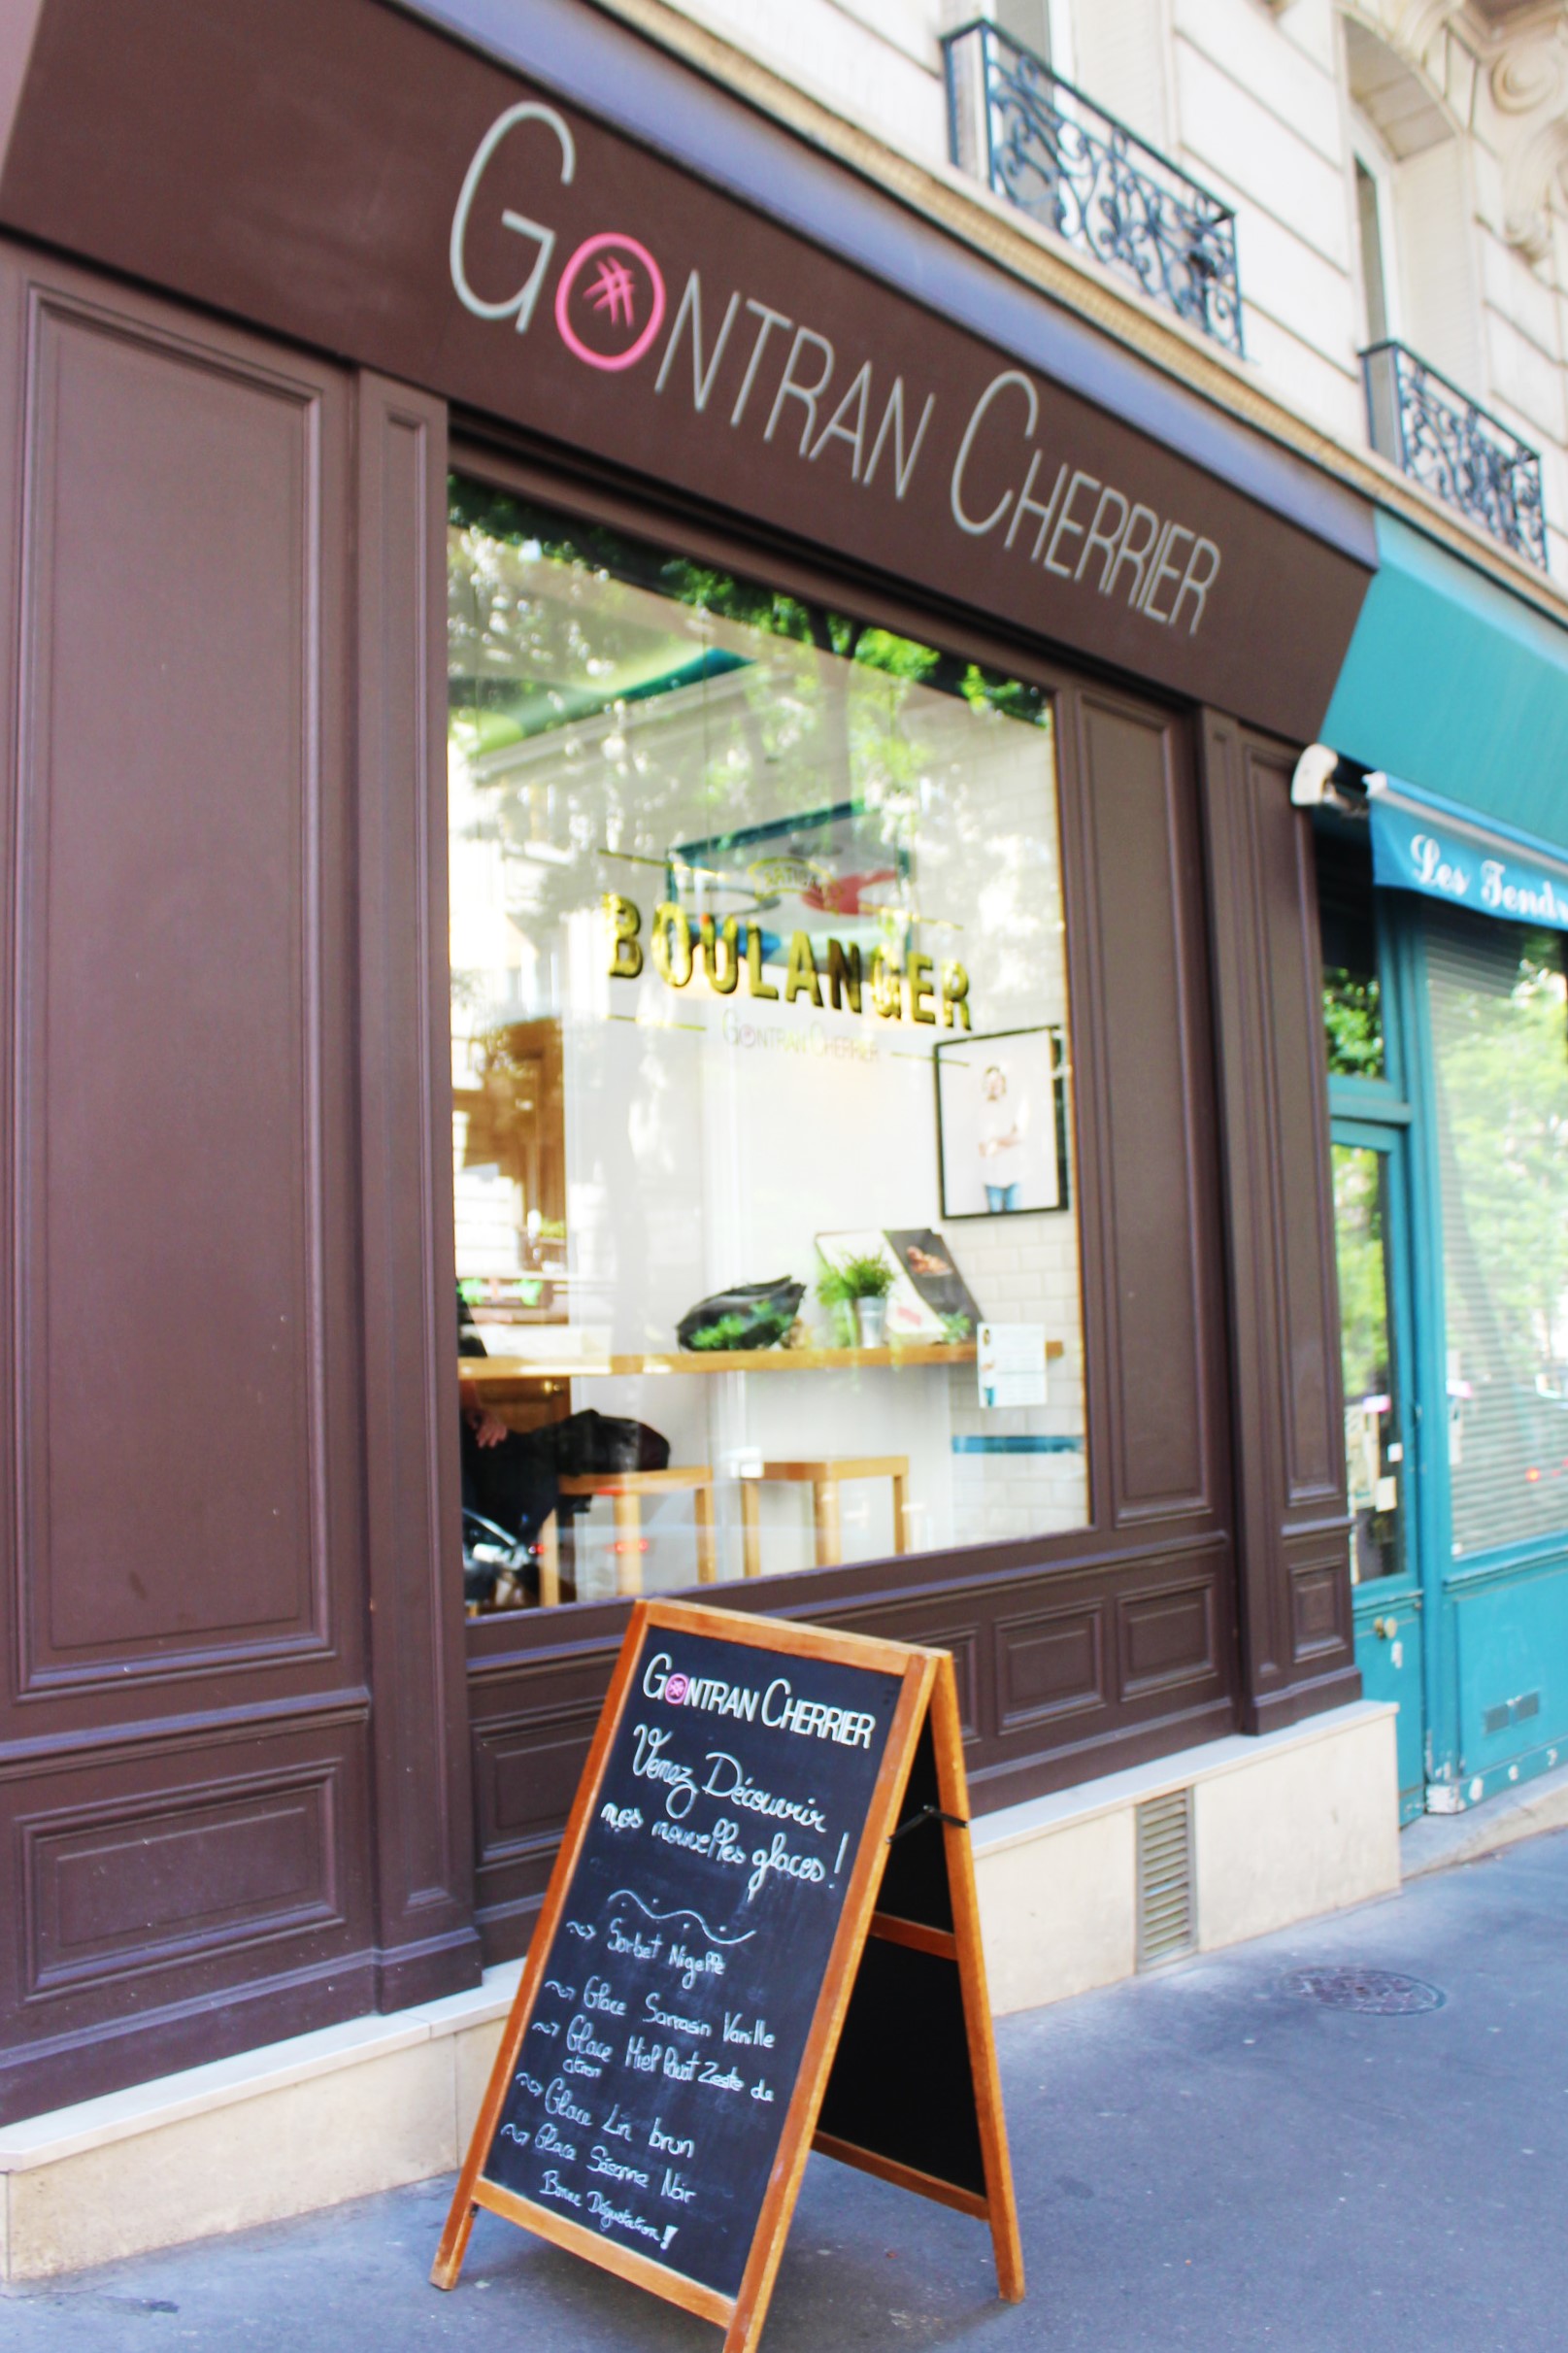 Gontran Cherrier in Paris